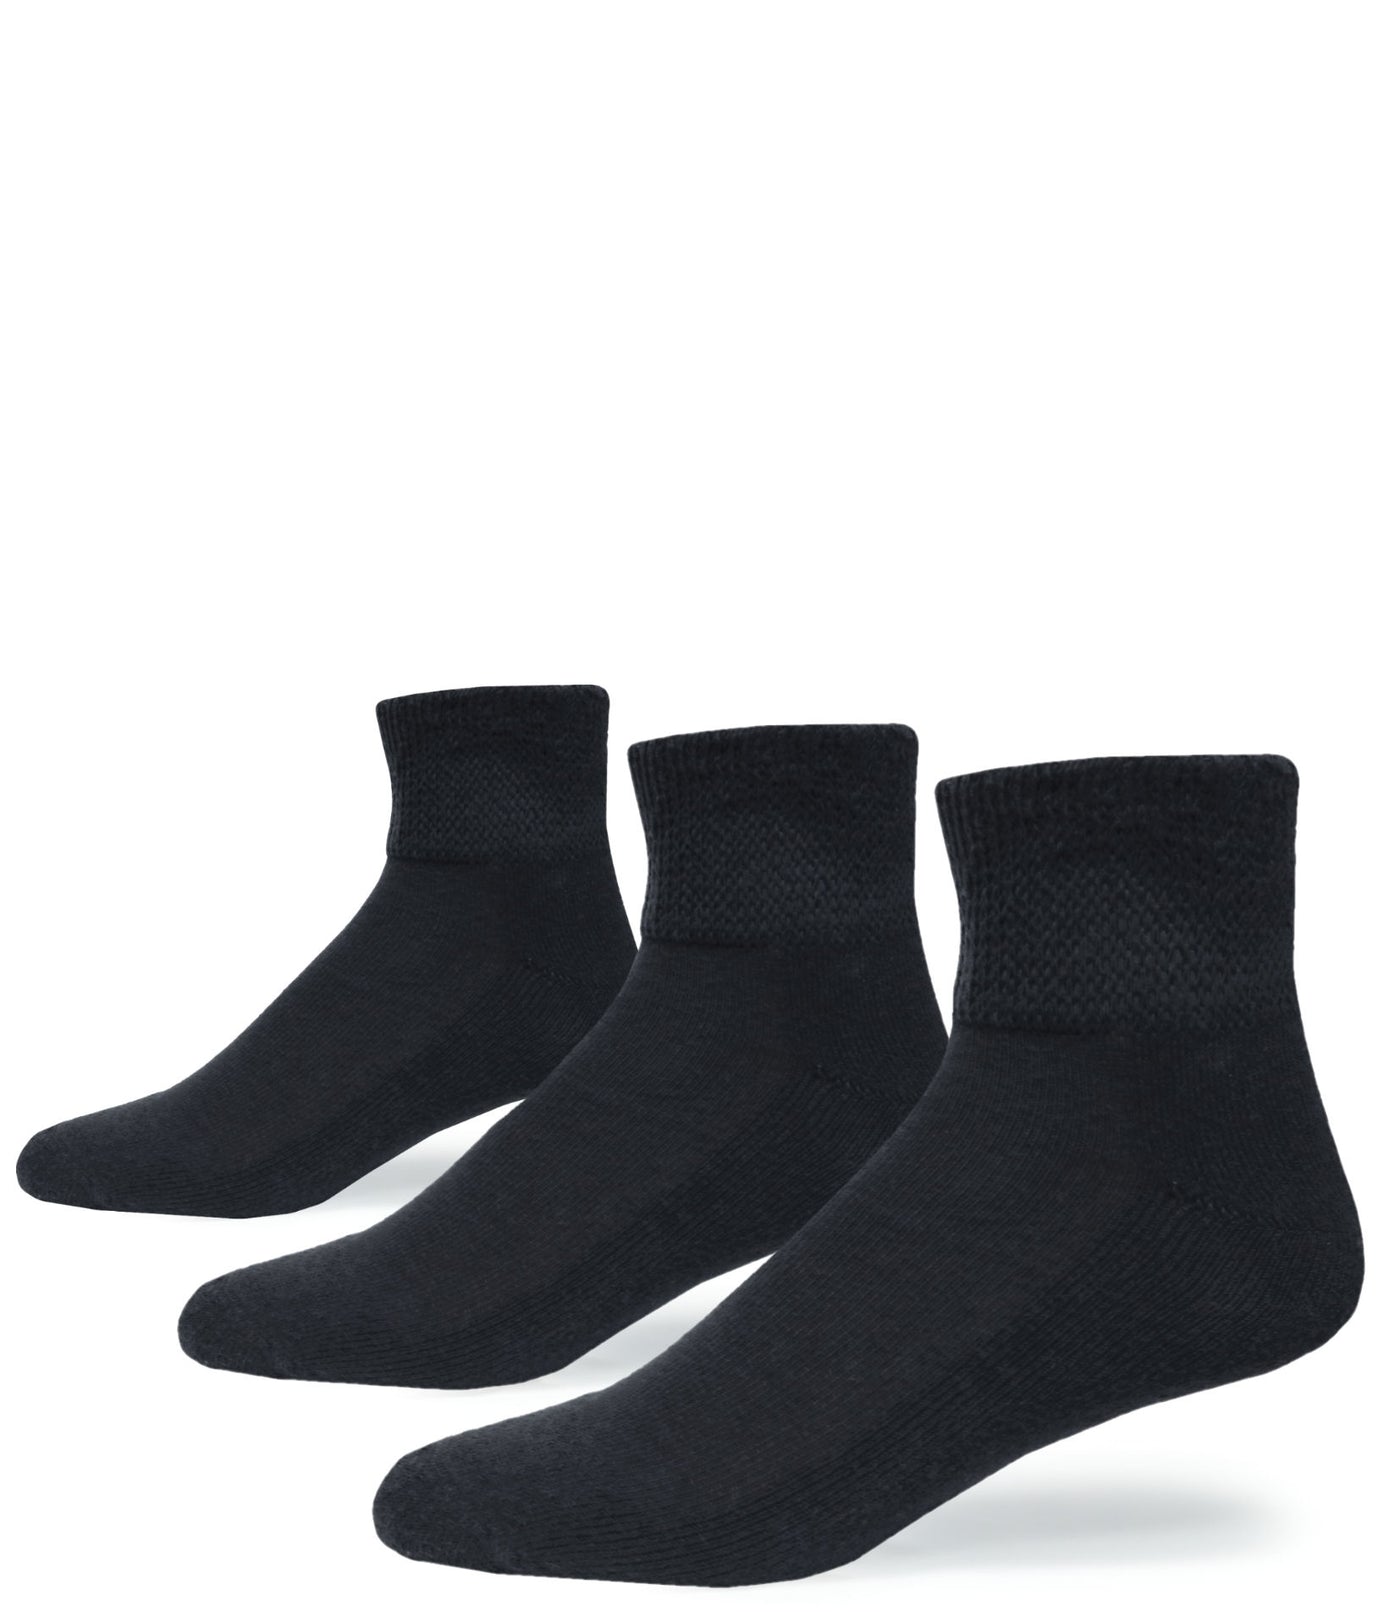 Diabetic Cotton Foot Comfort Black Quarter USA Socks 3 Pairs